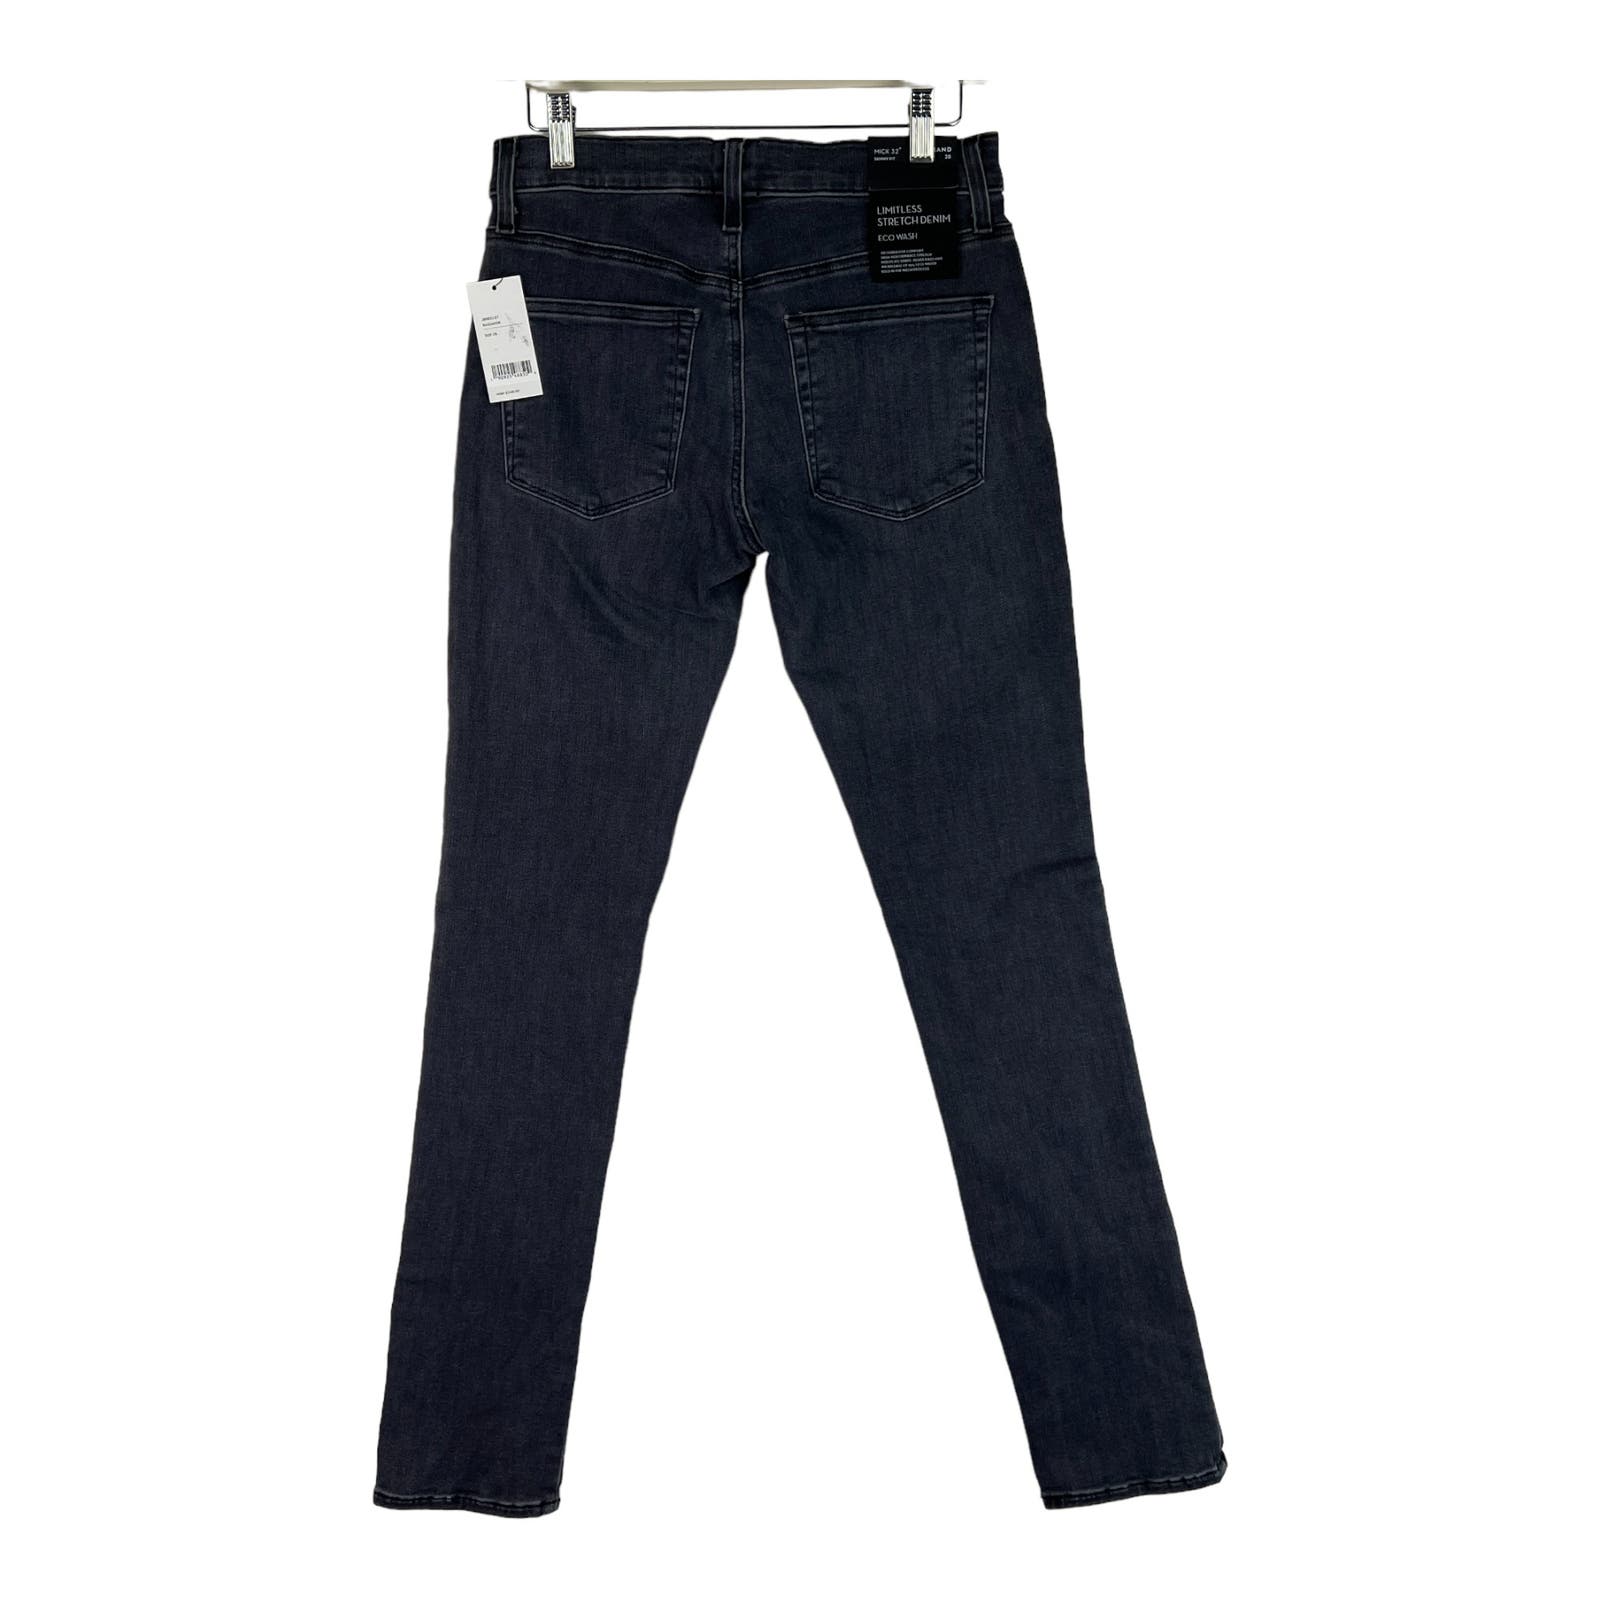 J Brand Women Grey Charcoal Slim Jeans US 28 Skinny Fit